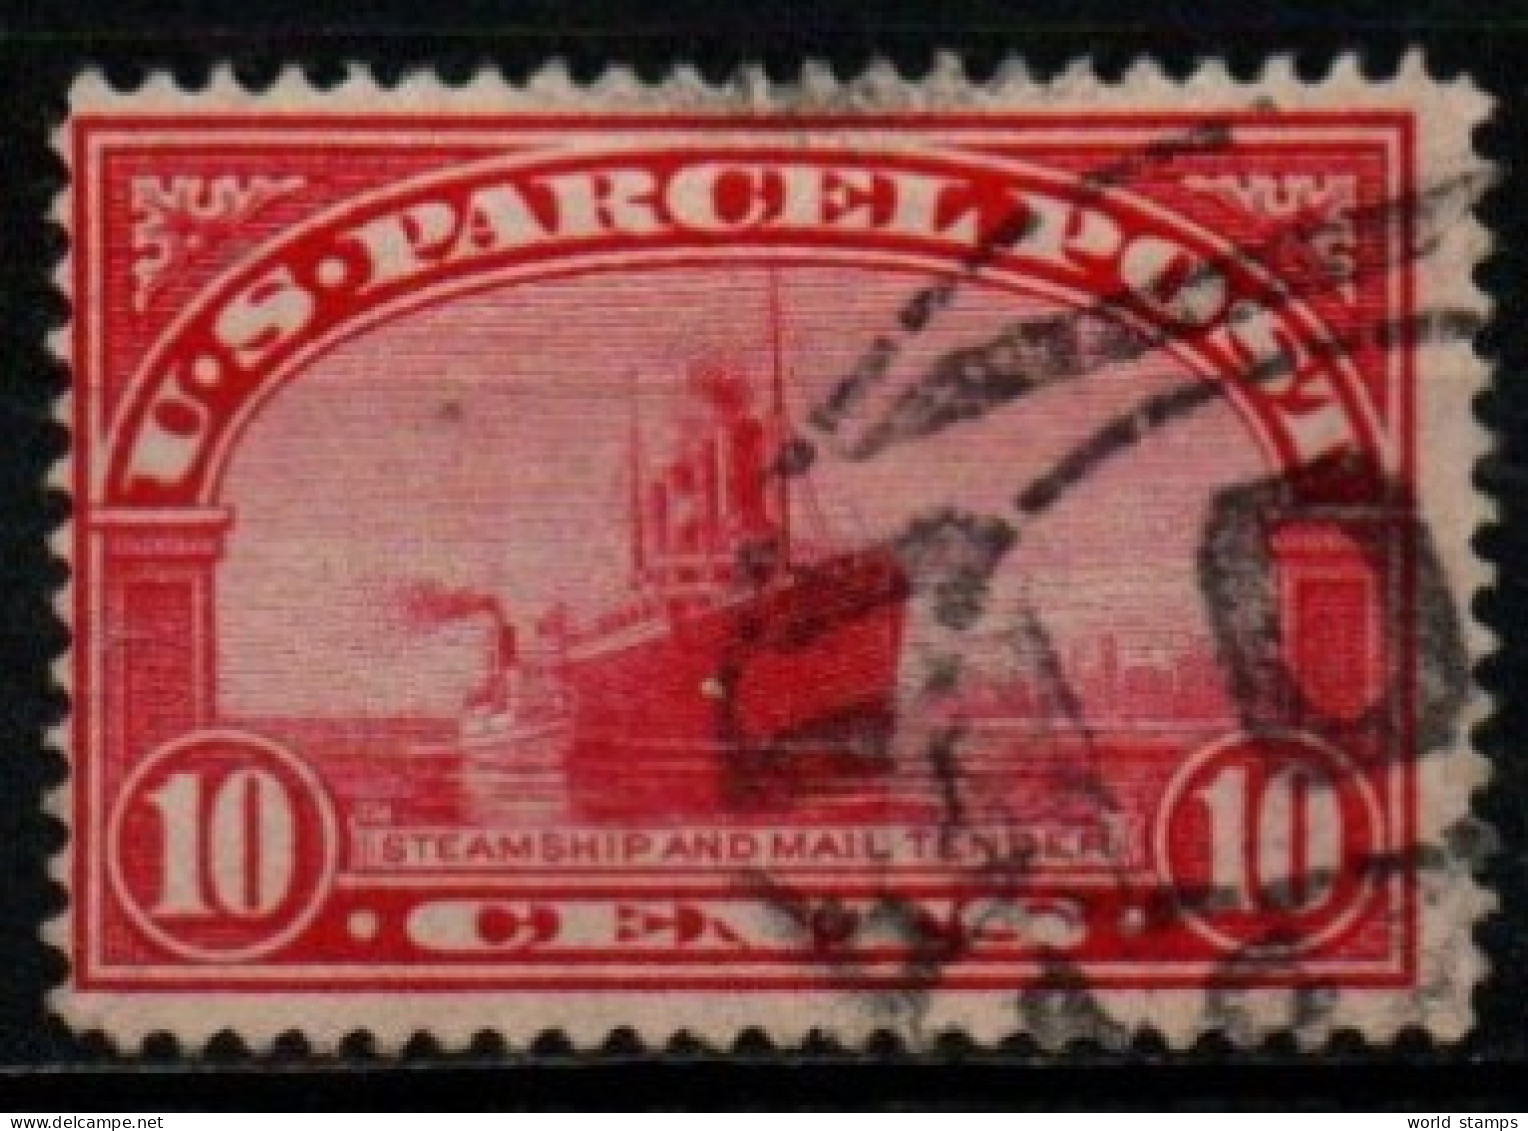 ETATS-UNIS D'AMERIQUE 1912 O - Reisgoedzegels